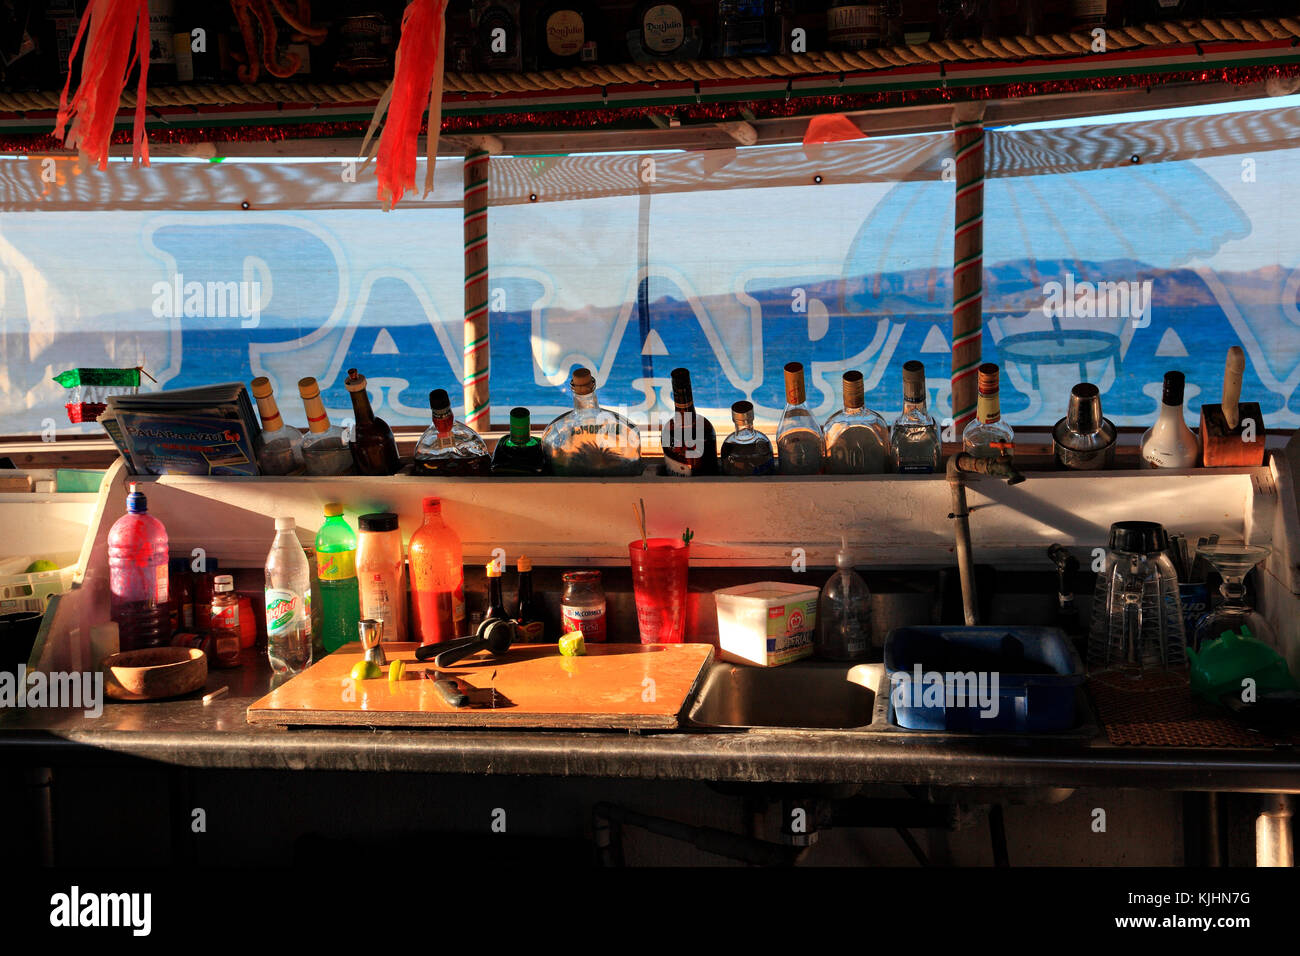 palapa beach bar Stock Photo